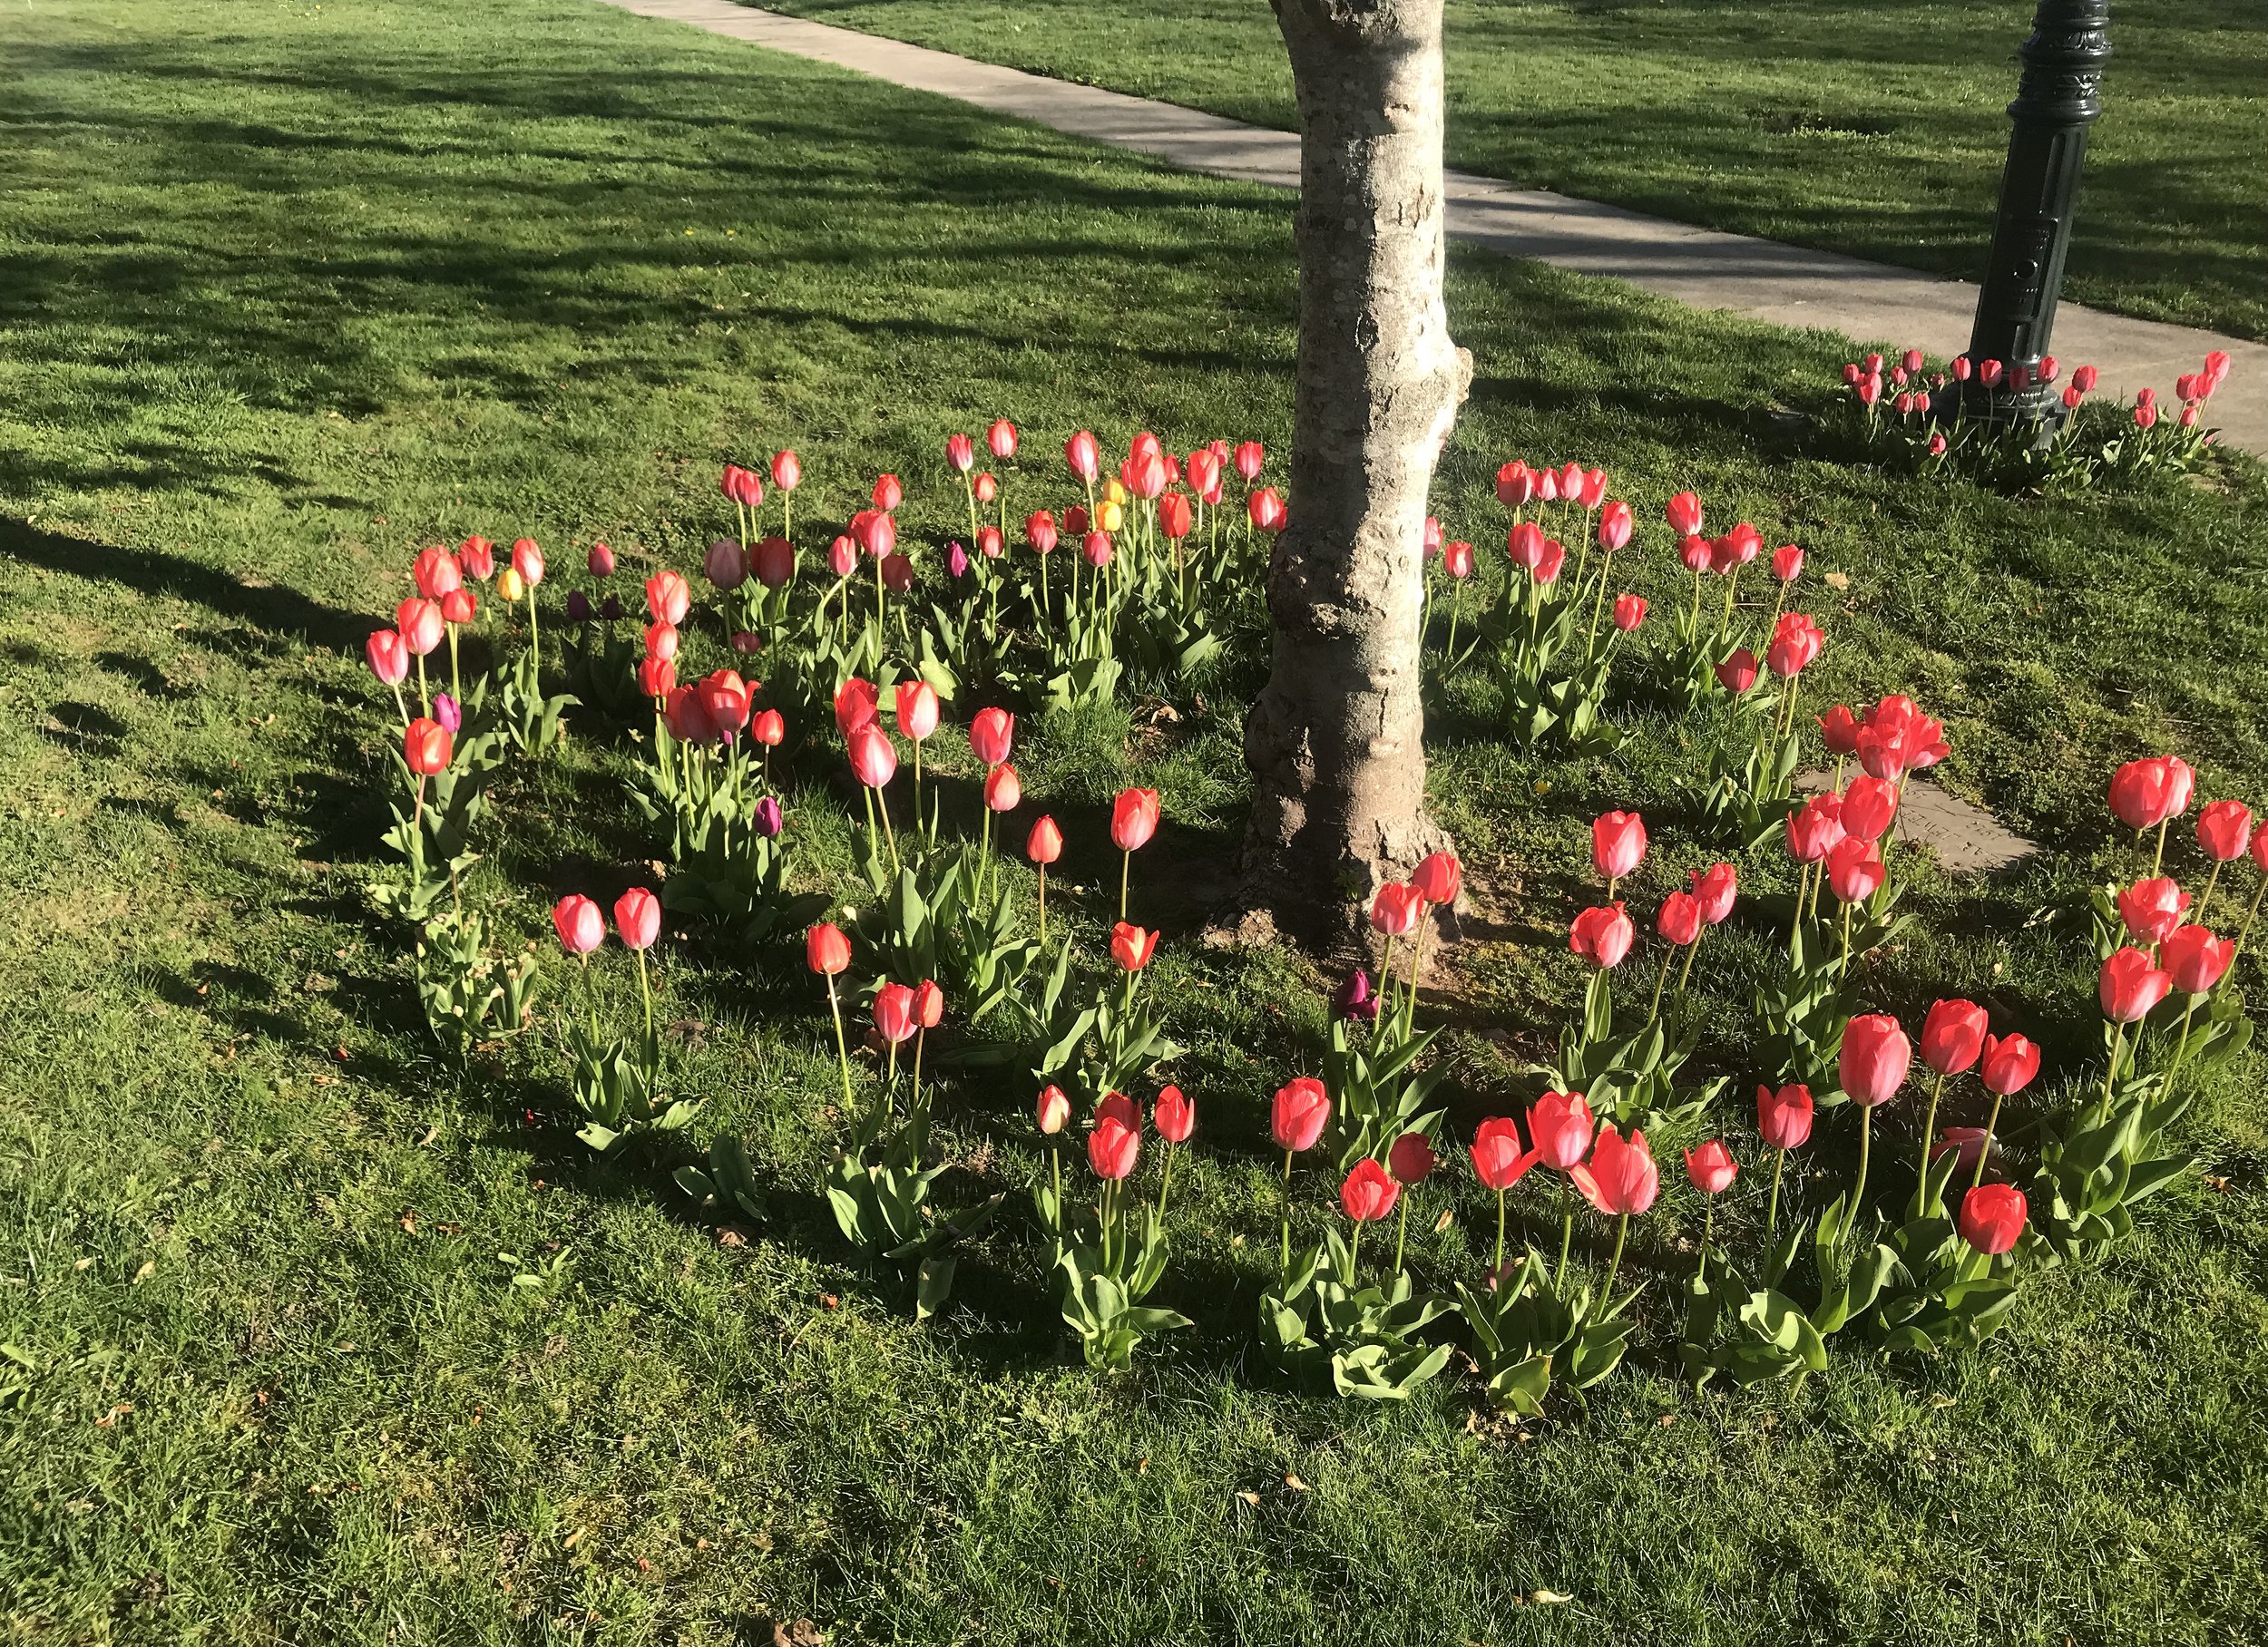 Stonington_Borough_Tulips at SFL 6 9362.jpg